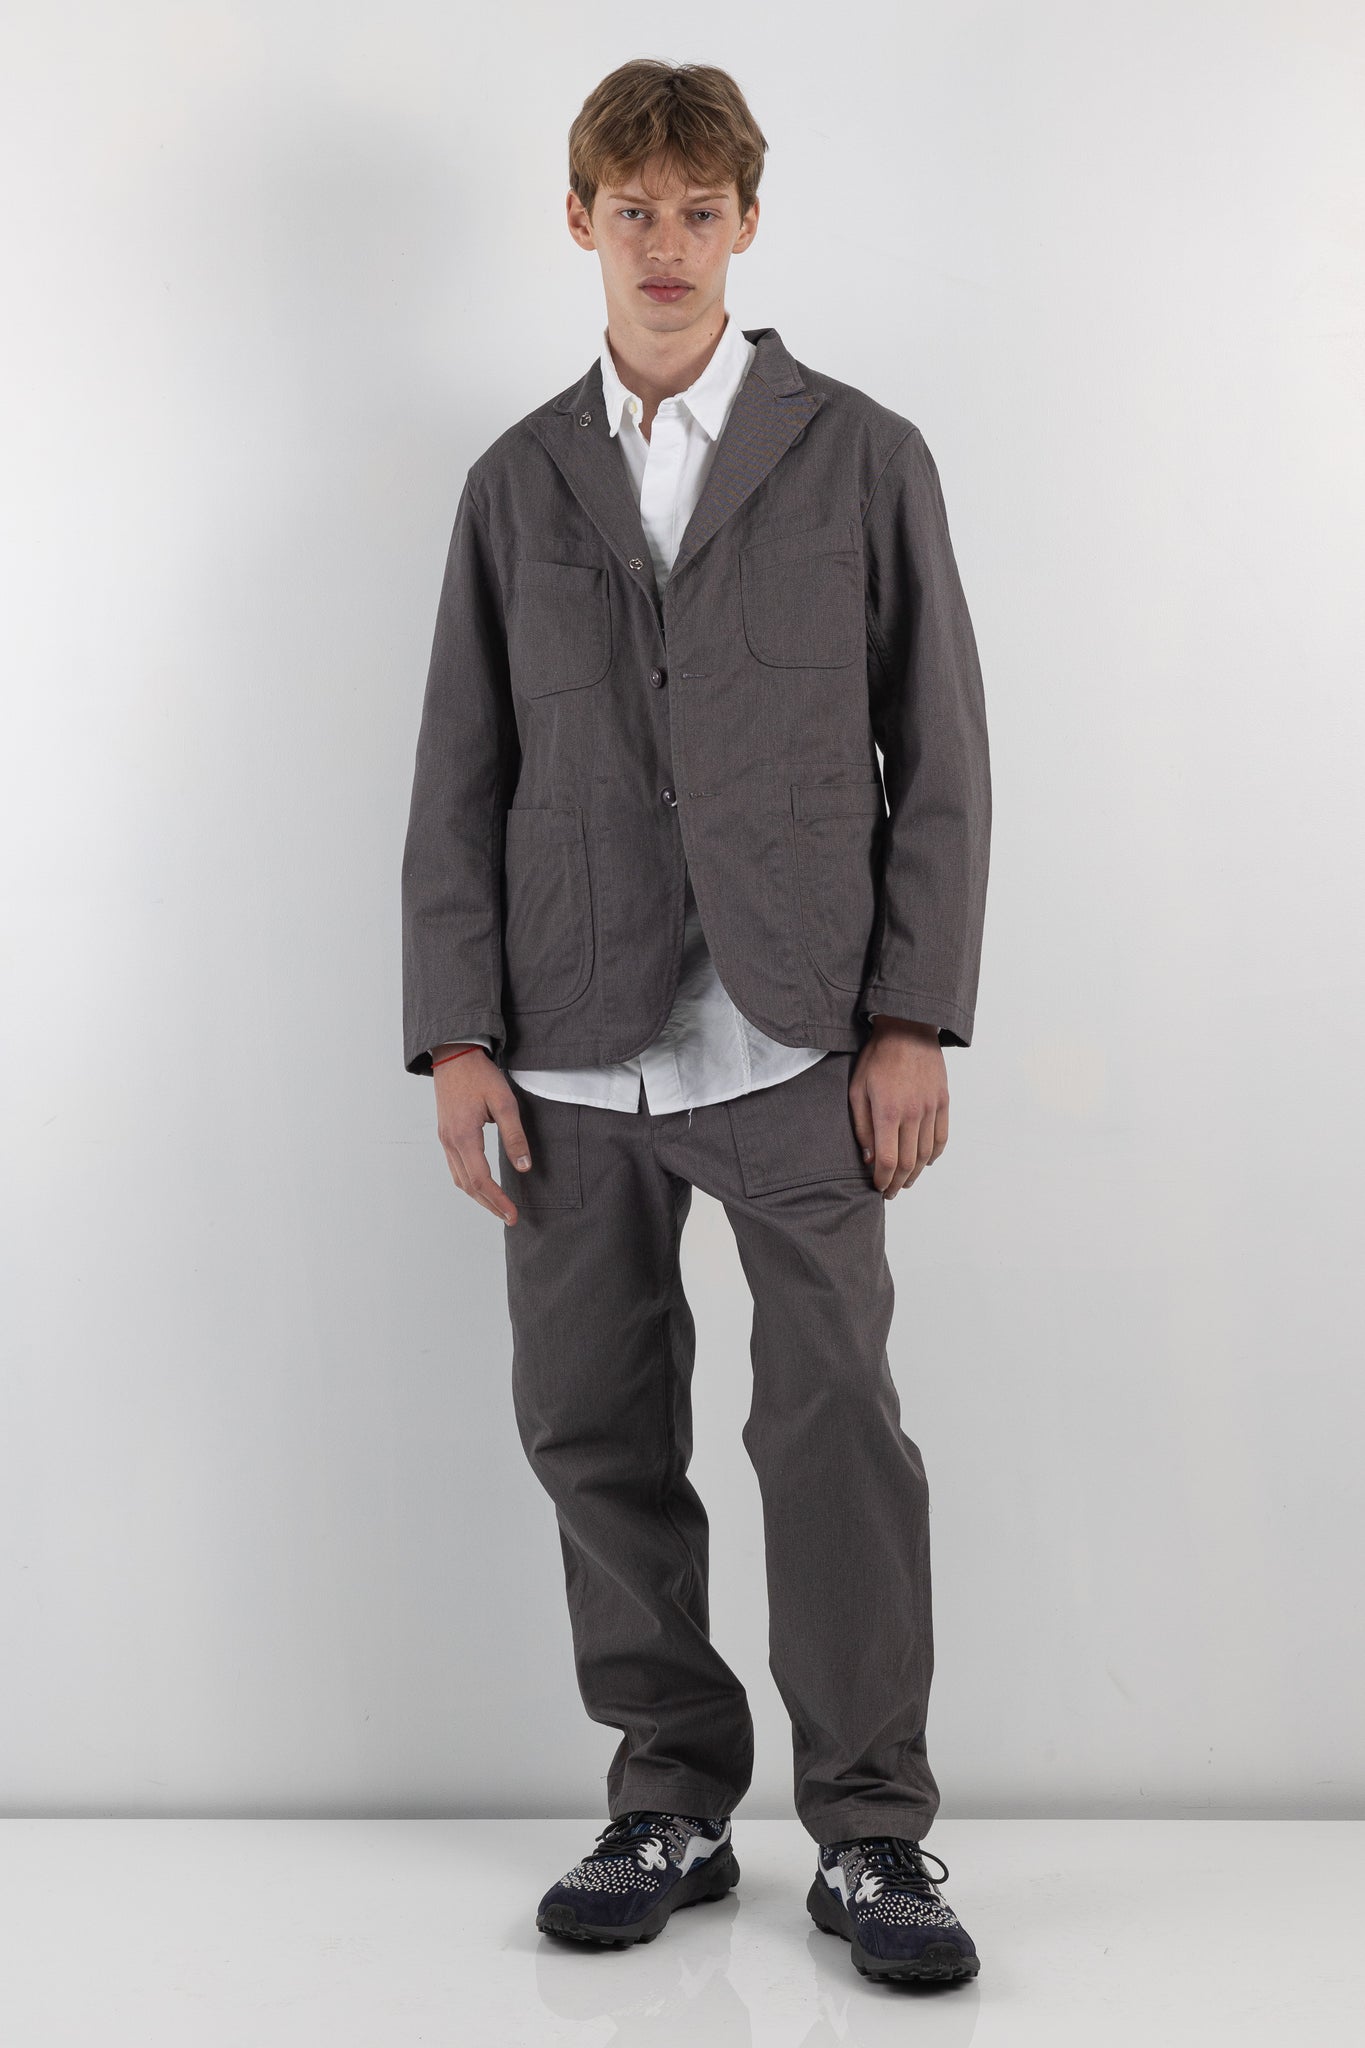 Mens jacket | Engineered Garments Bedford Jacket | The Standard Store 